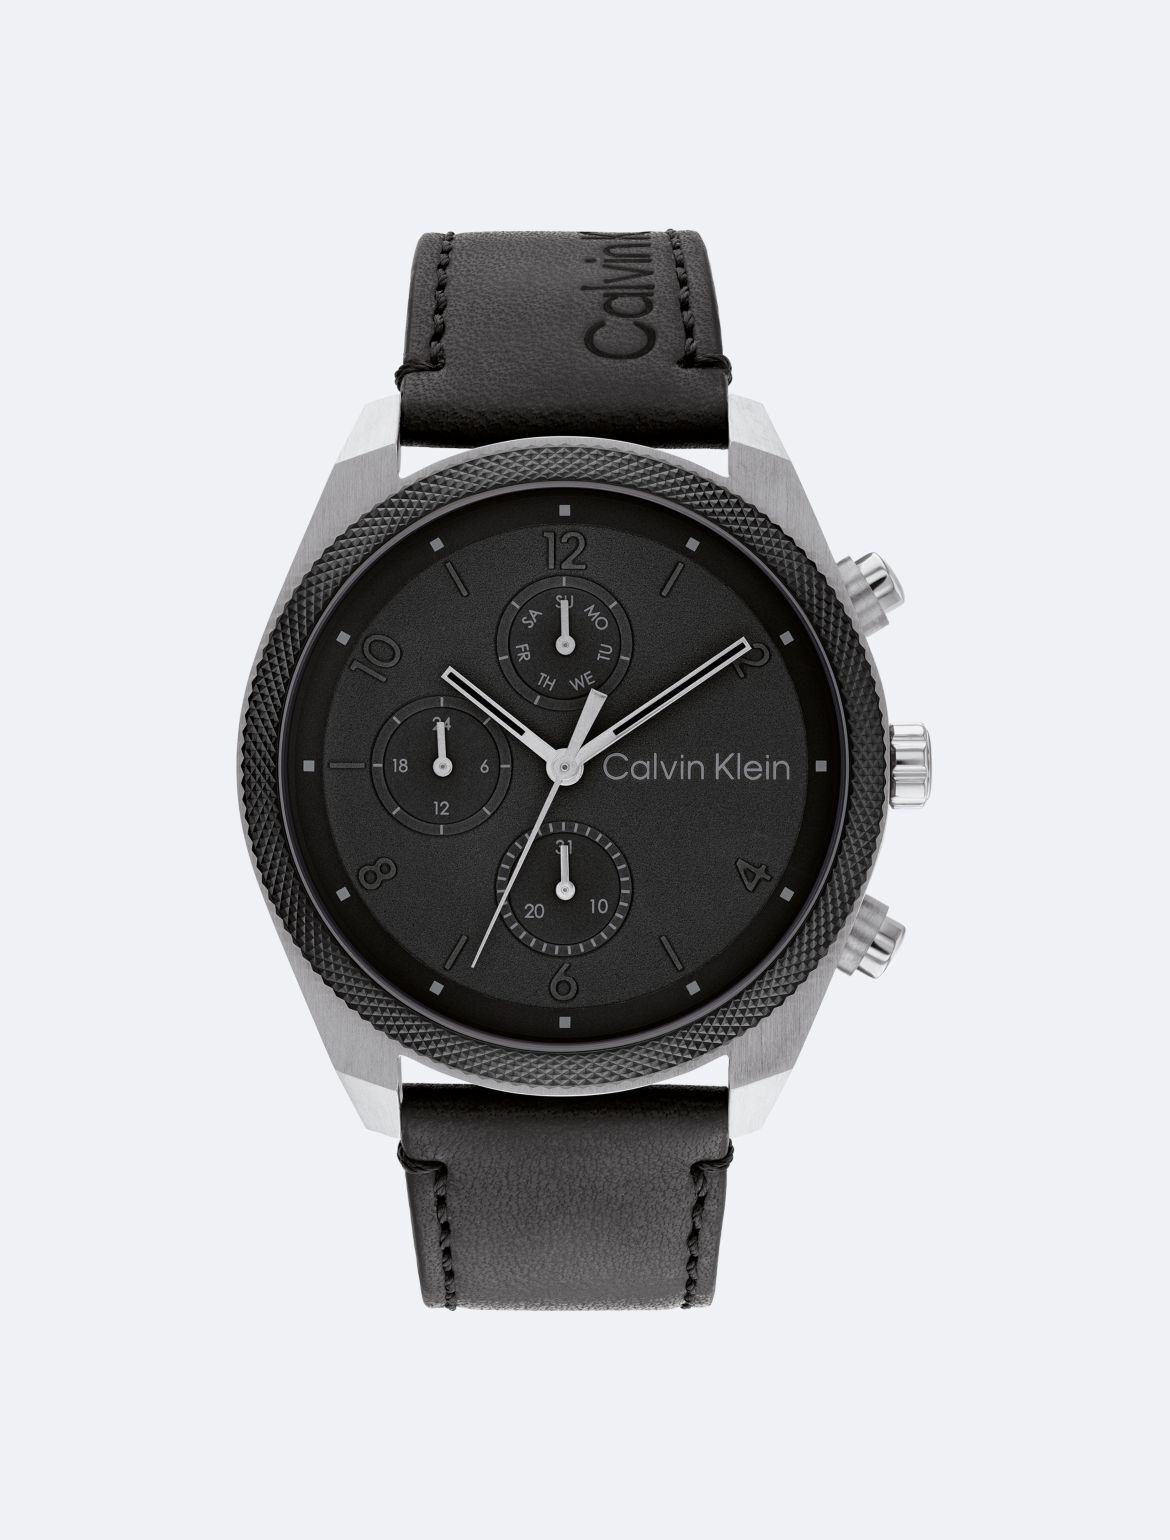 Calvin Klein Men's Leather Strap Chronograph Watch - Black